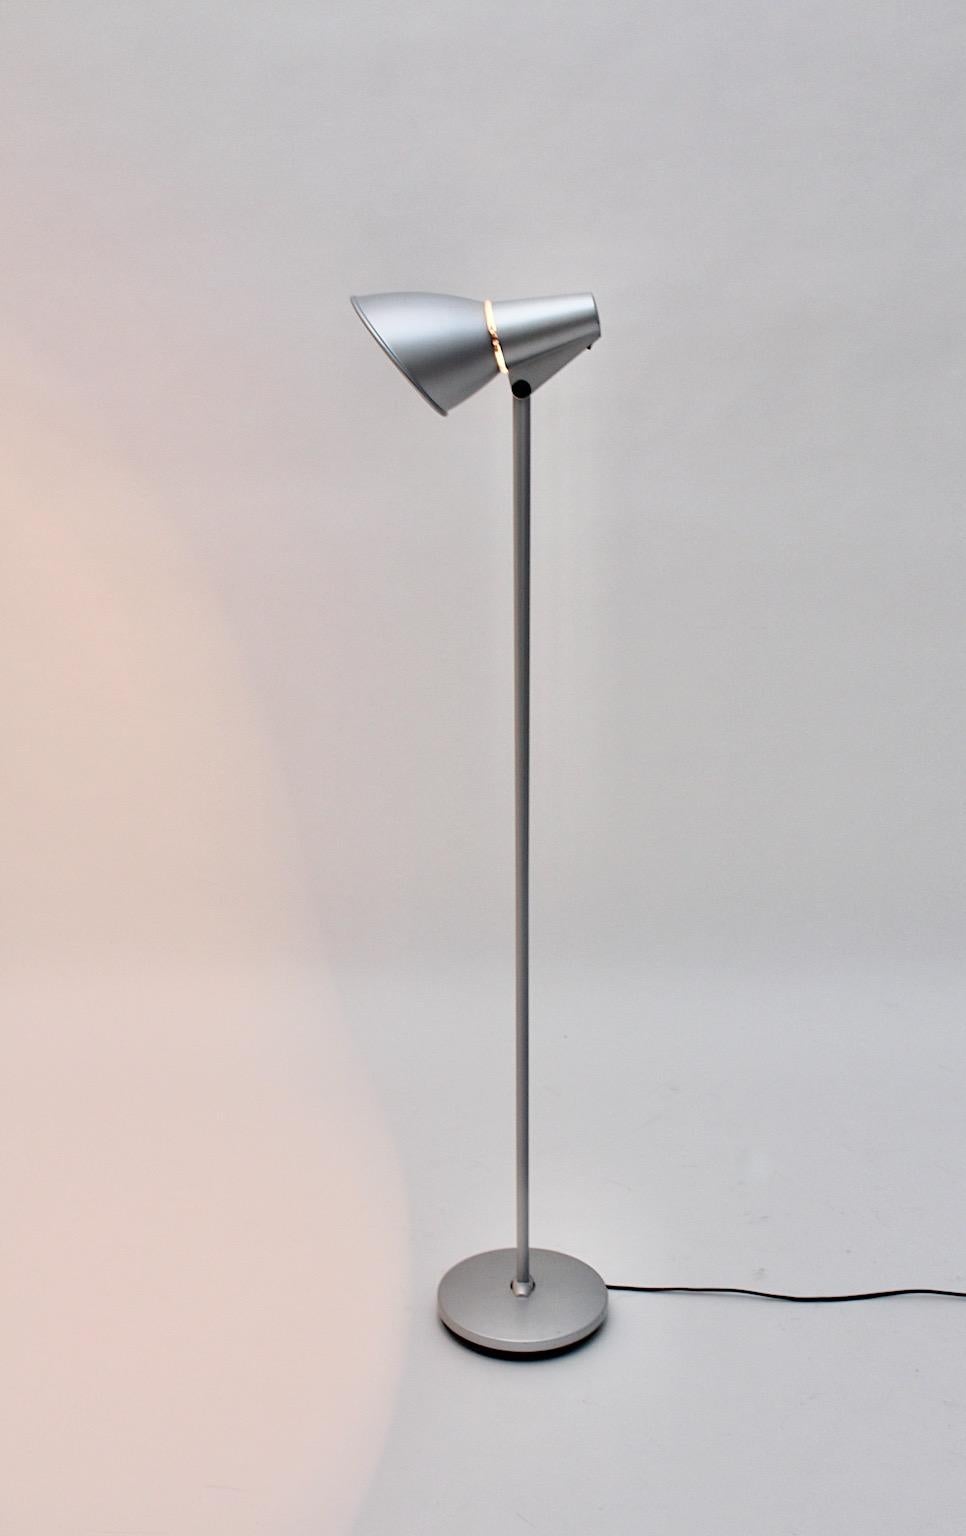 Italian Modern Vintage Silver Metal Floor Lamp Hannes Wettstein for Artemide 1996 Italy For Sale